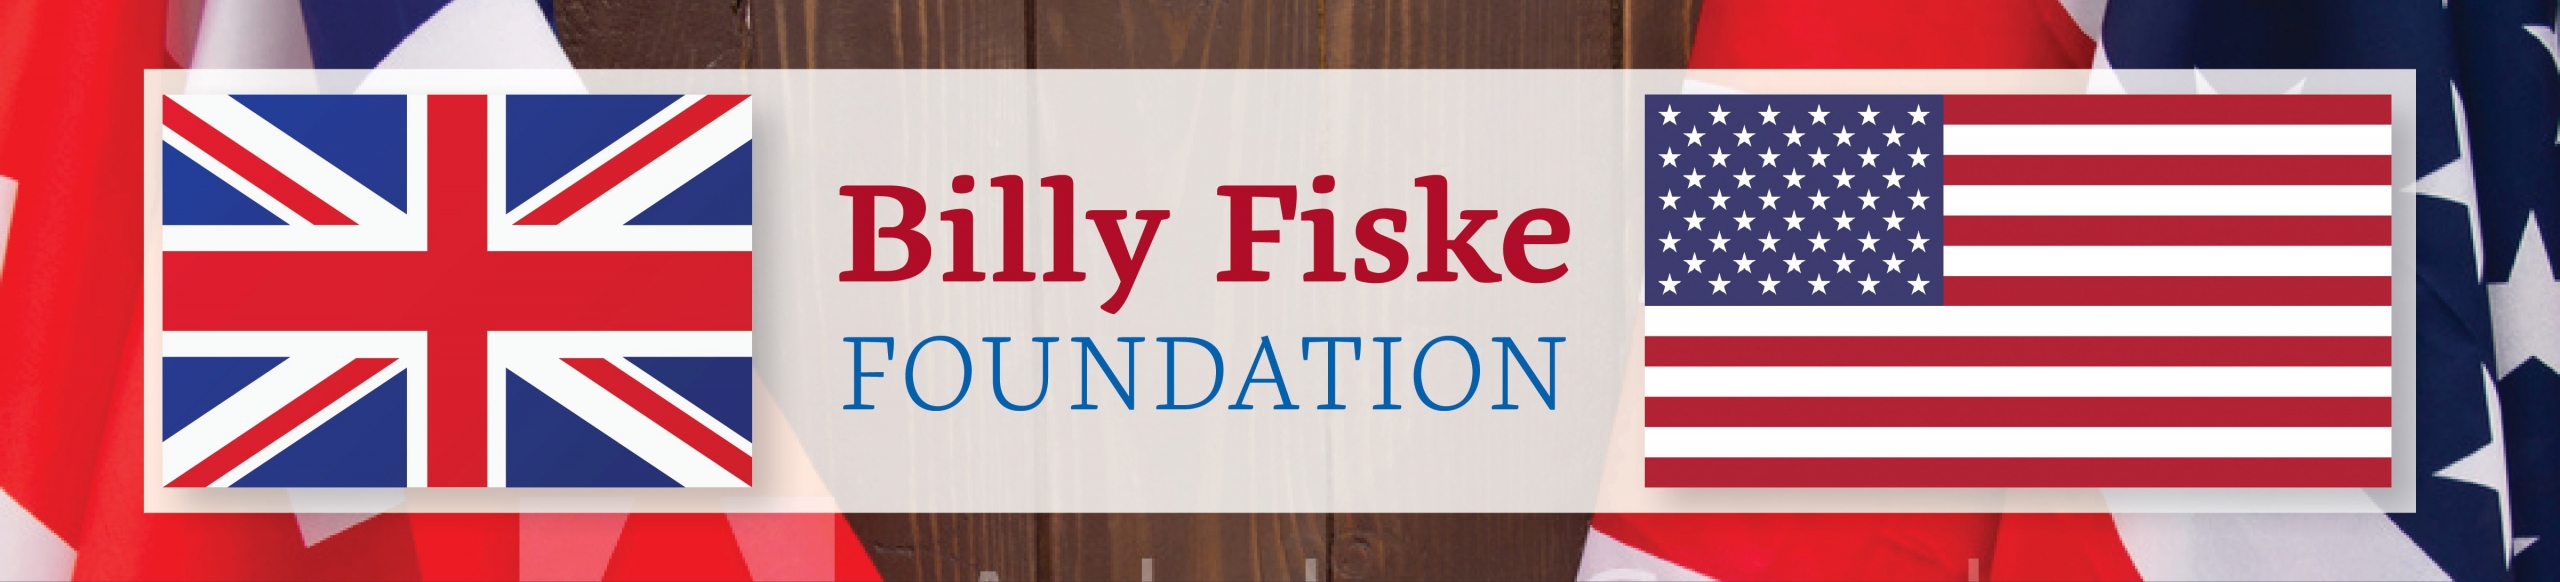 Billy Fiske Foundation